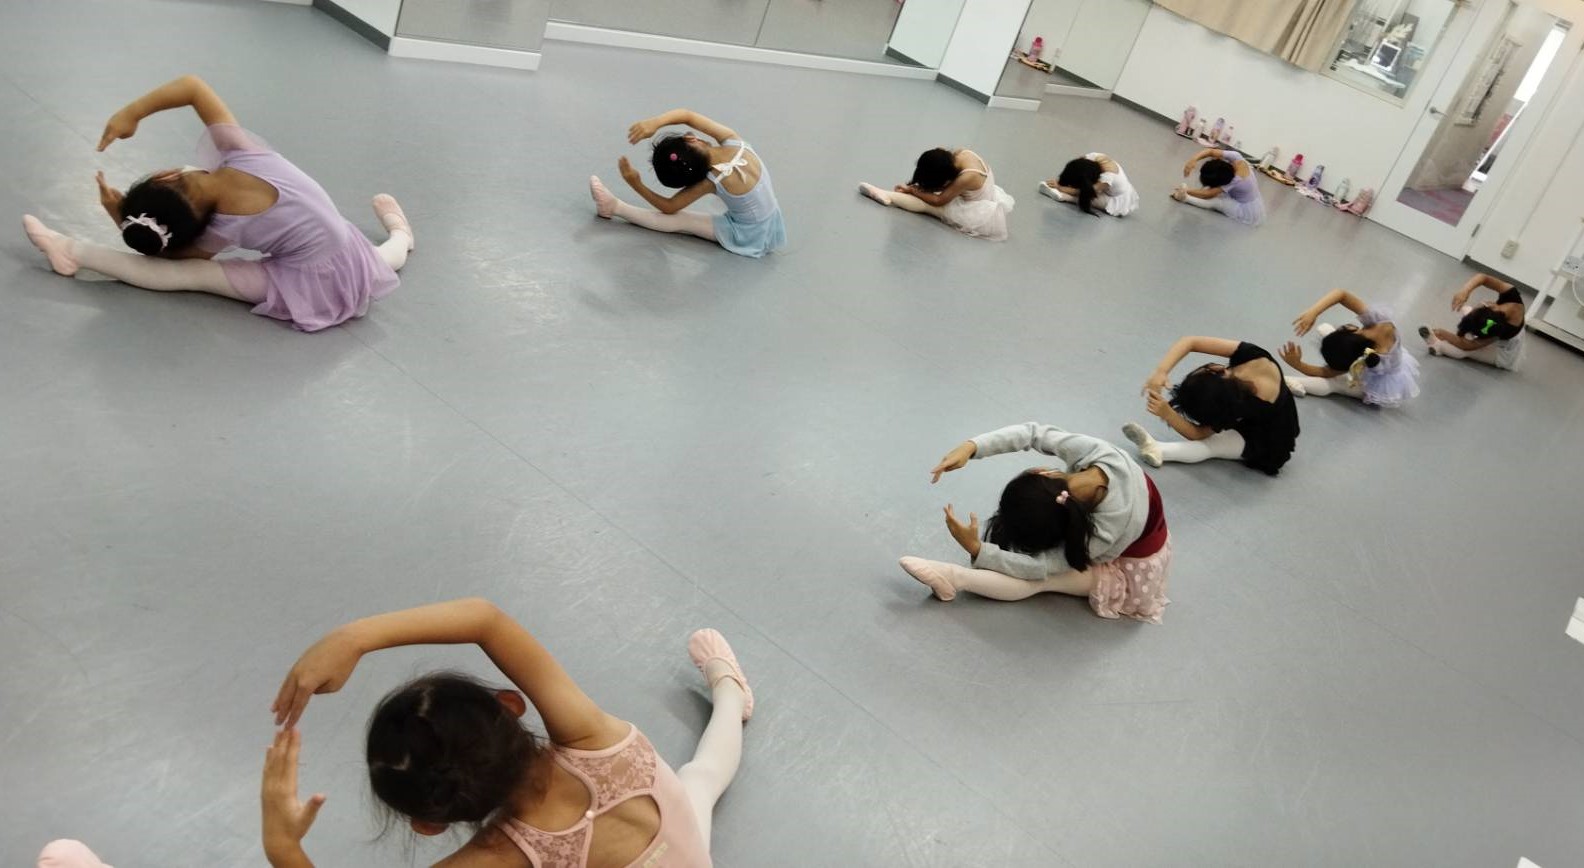 Marty Ballet School